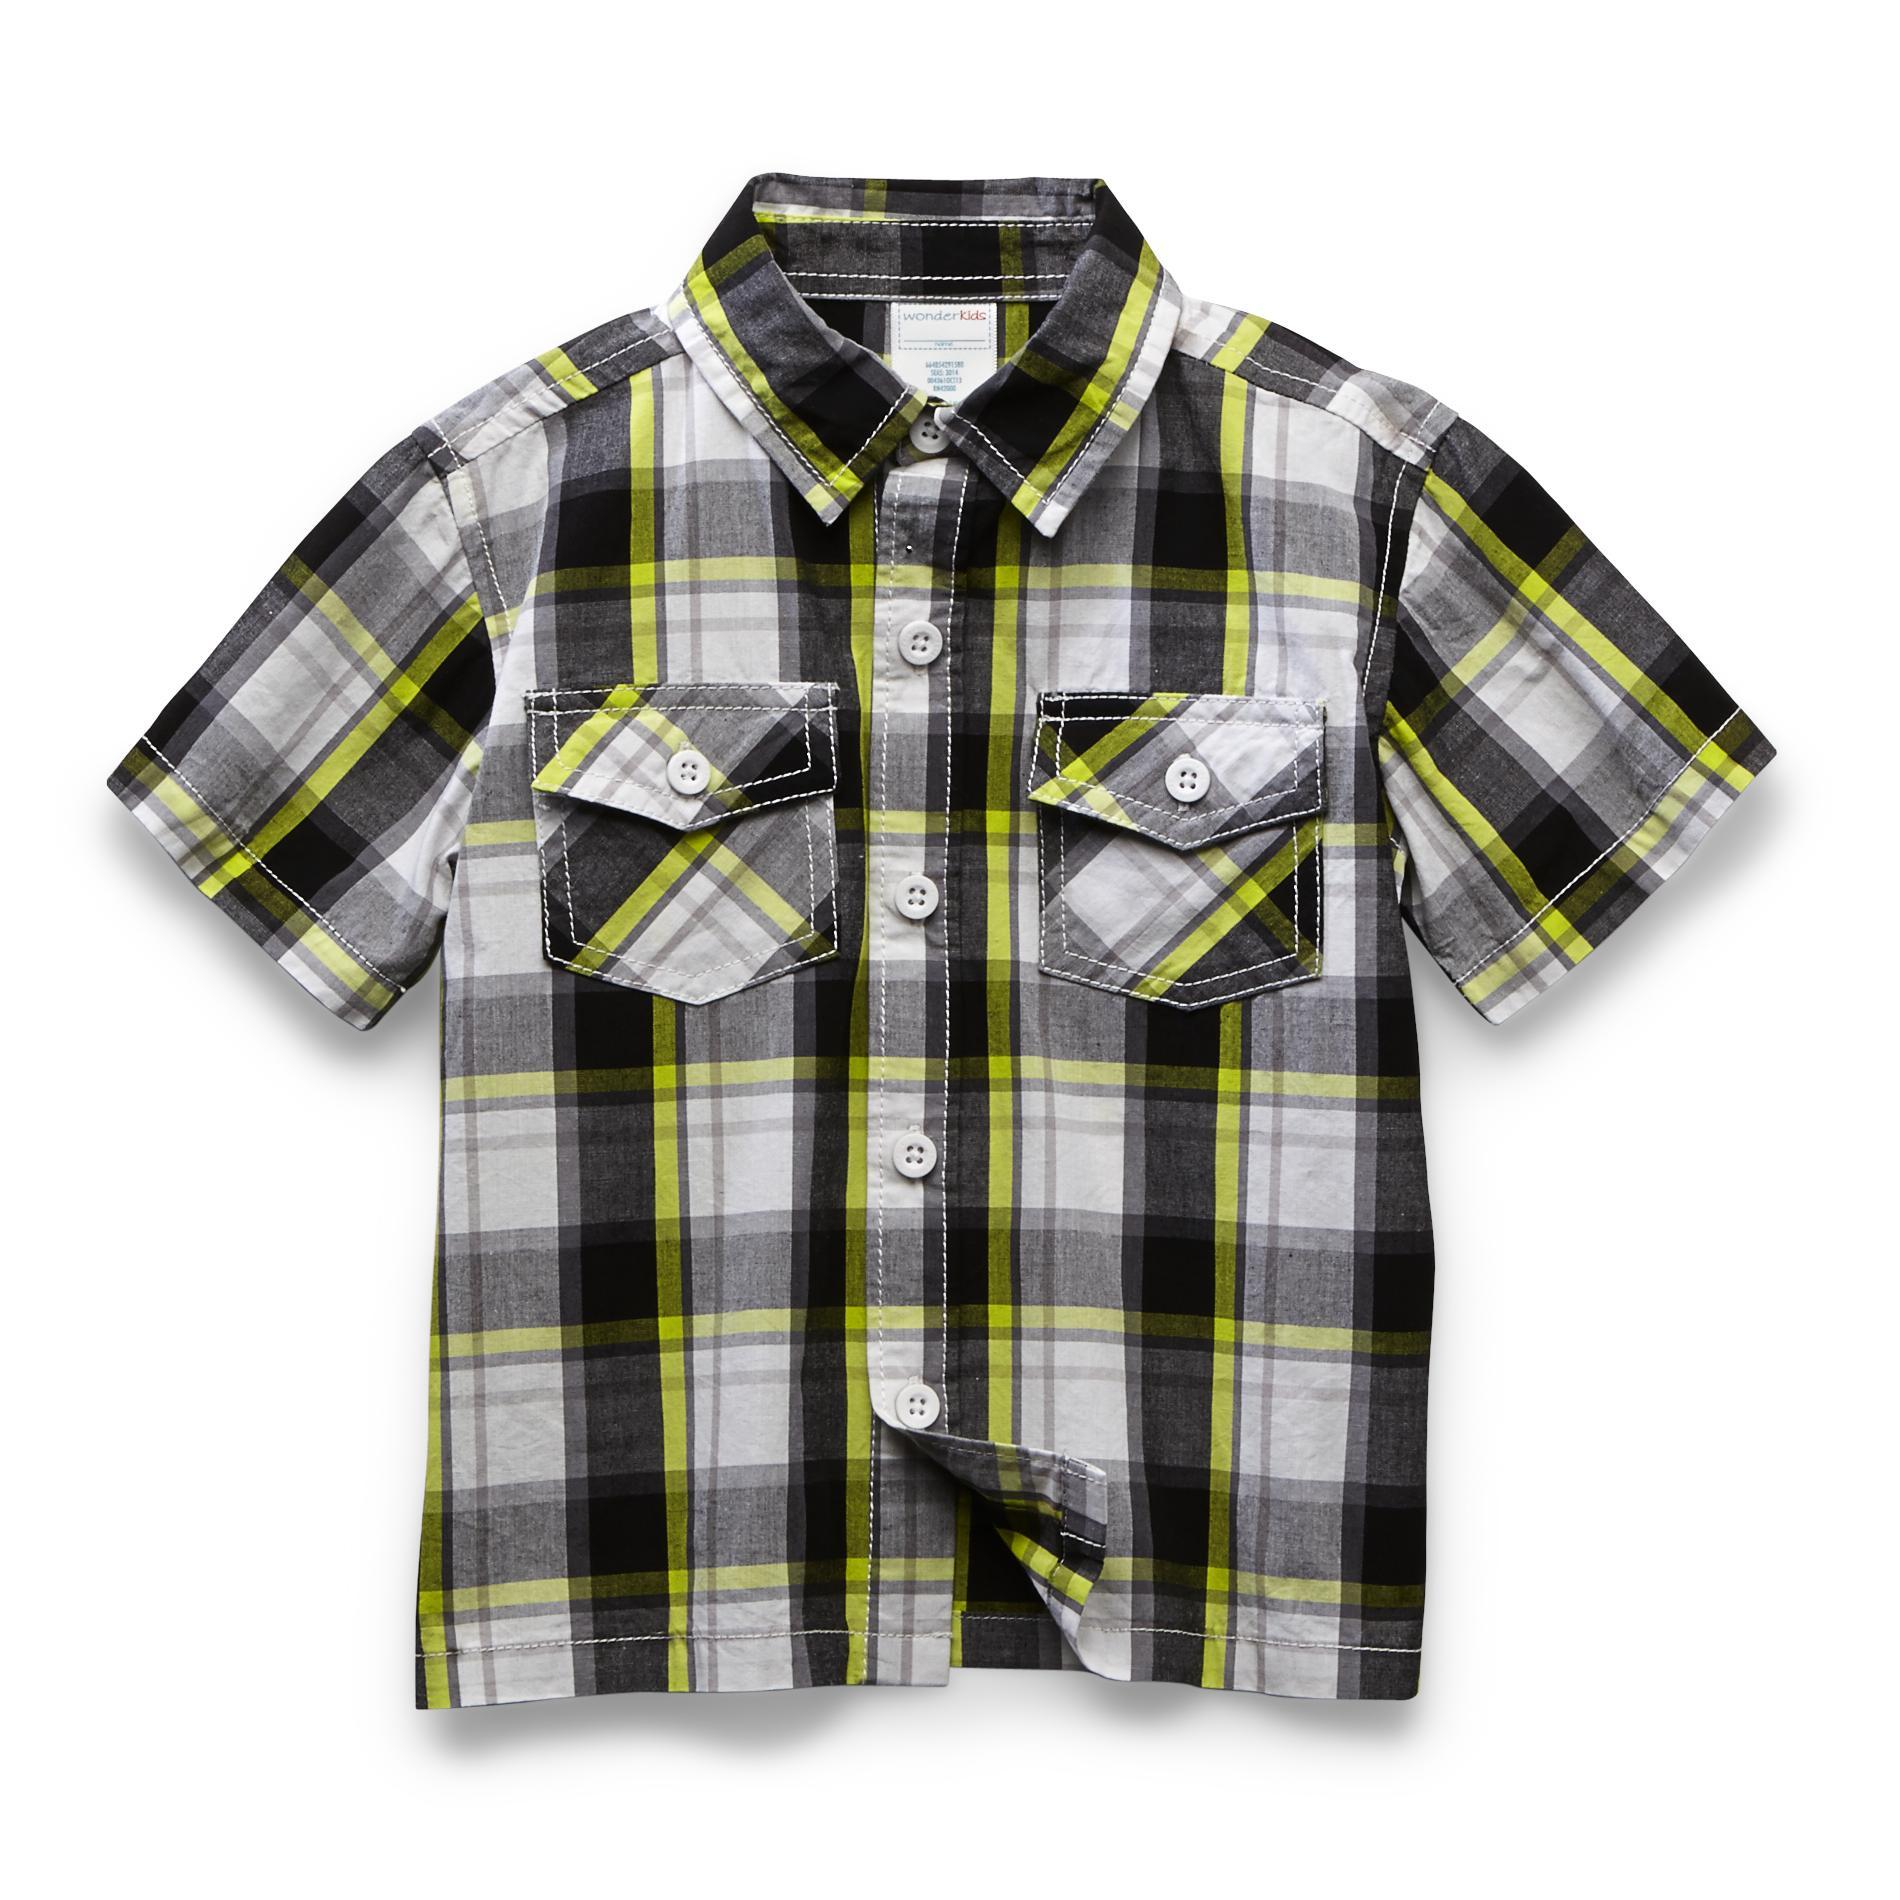 WonderKids Infant & Toddler Boy's Short-Sleeve Woven Shirt - Plaid